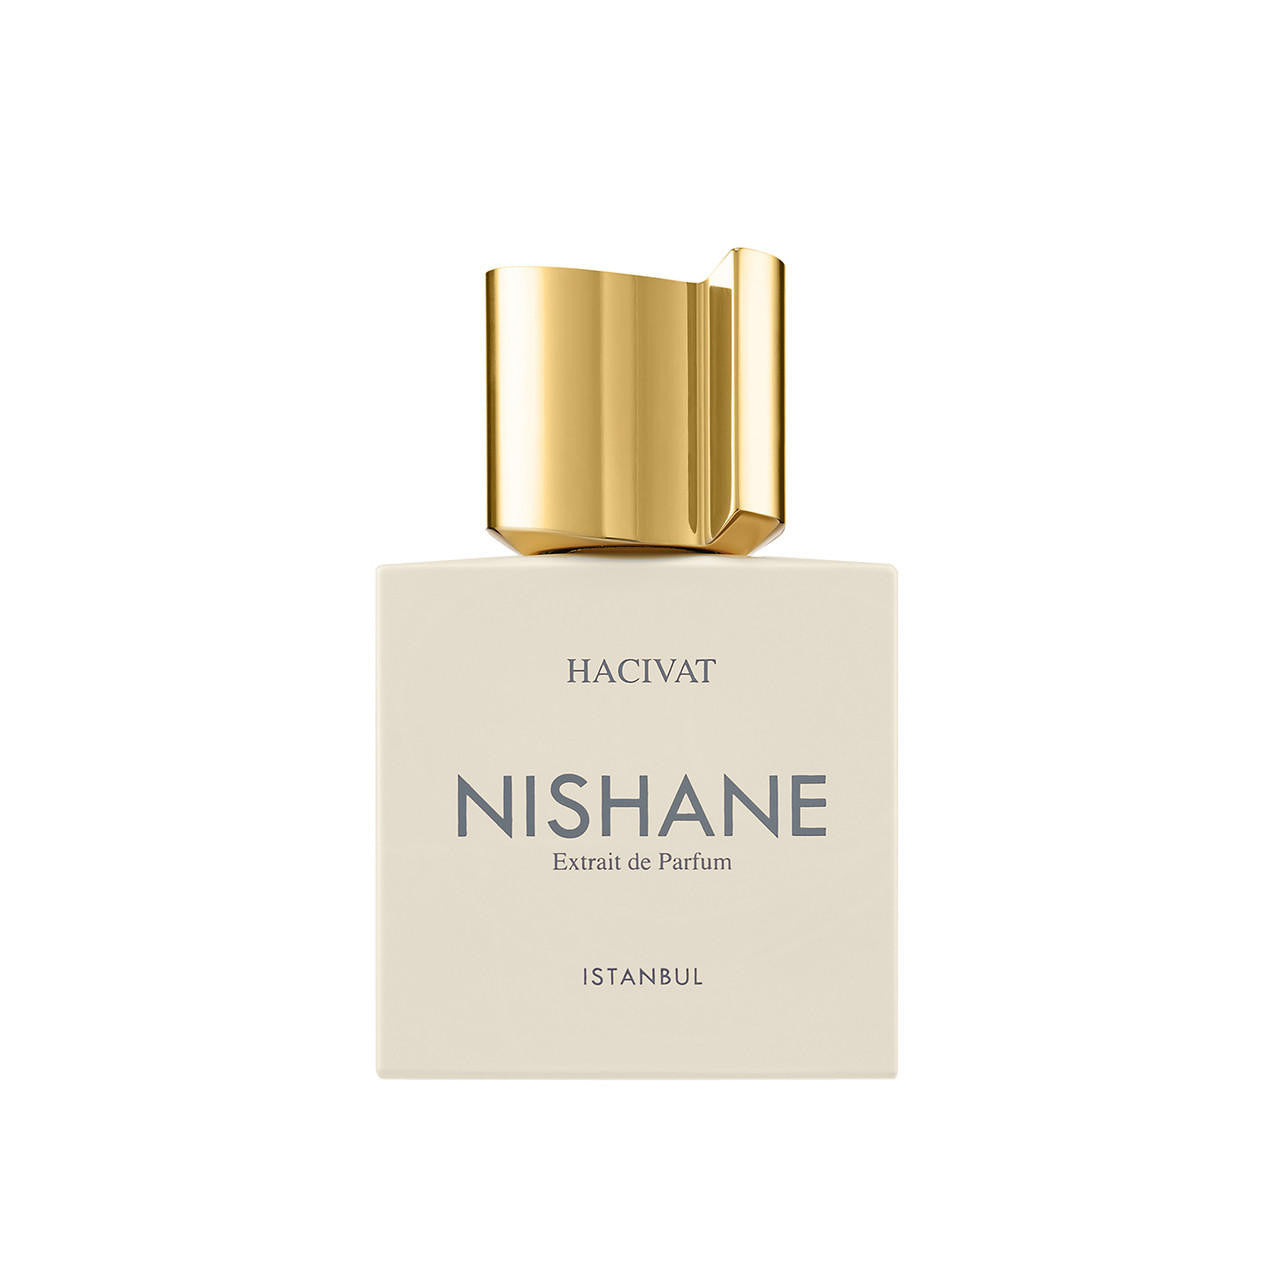  Nishane Hacivat Extrait de Parfum 